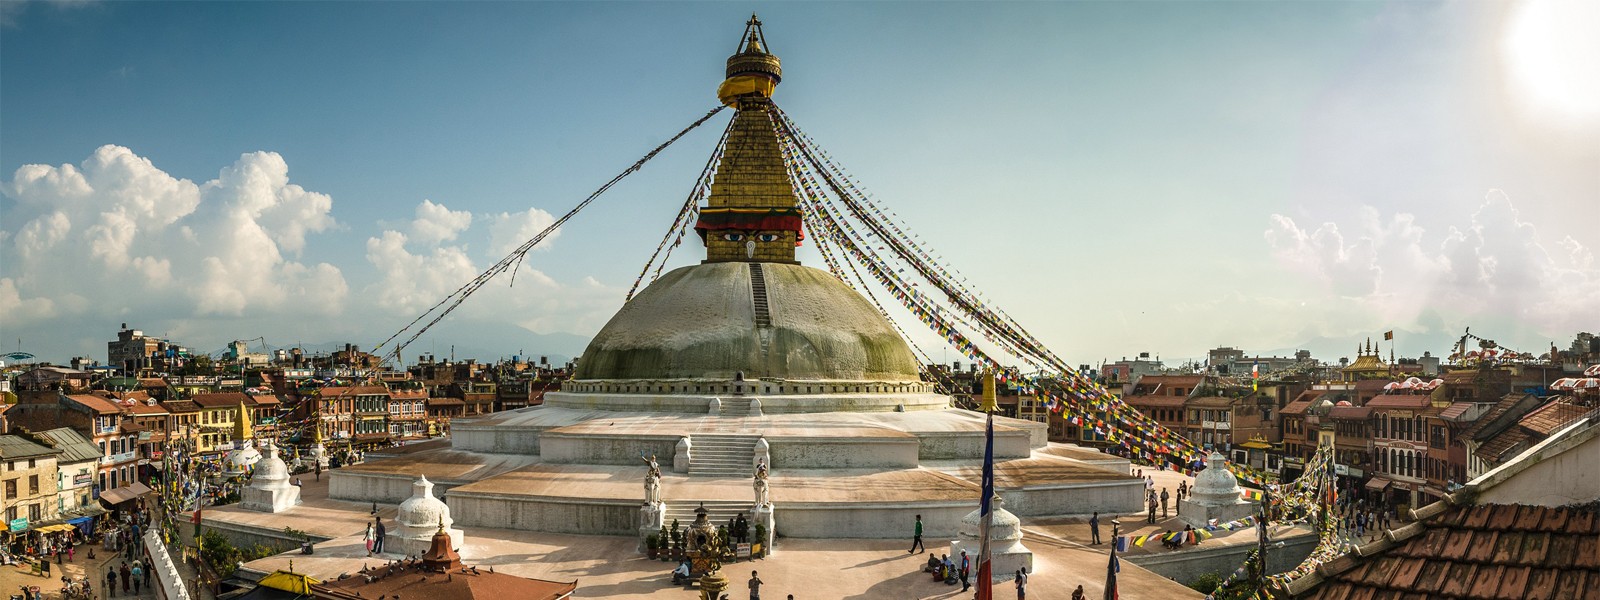 Swayambhunath Temple - Kathmandu